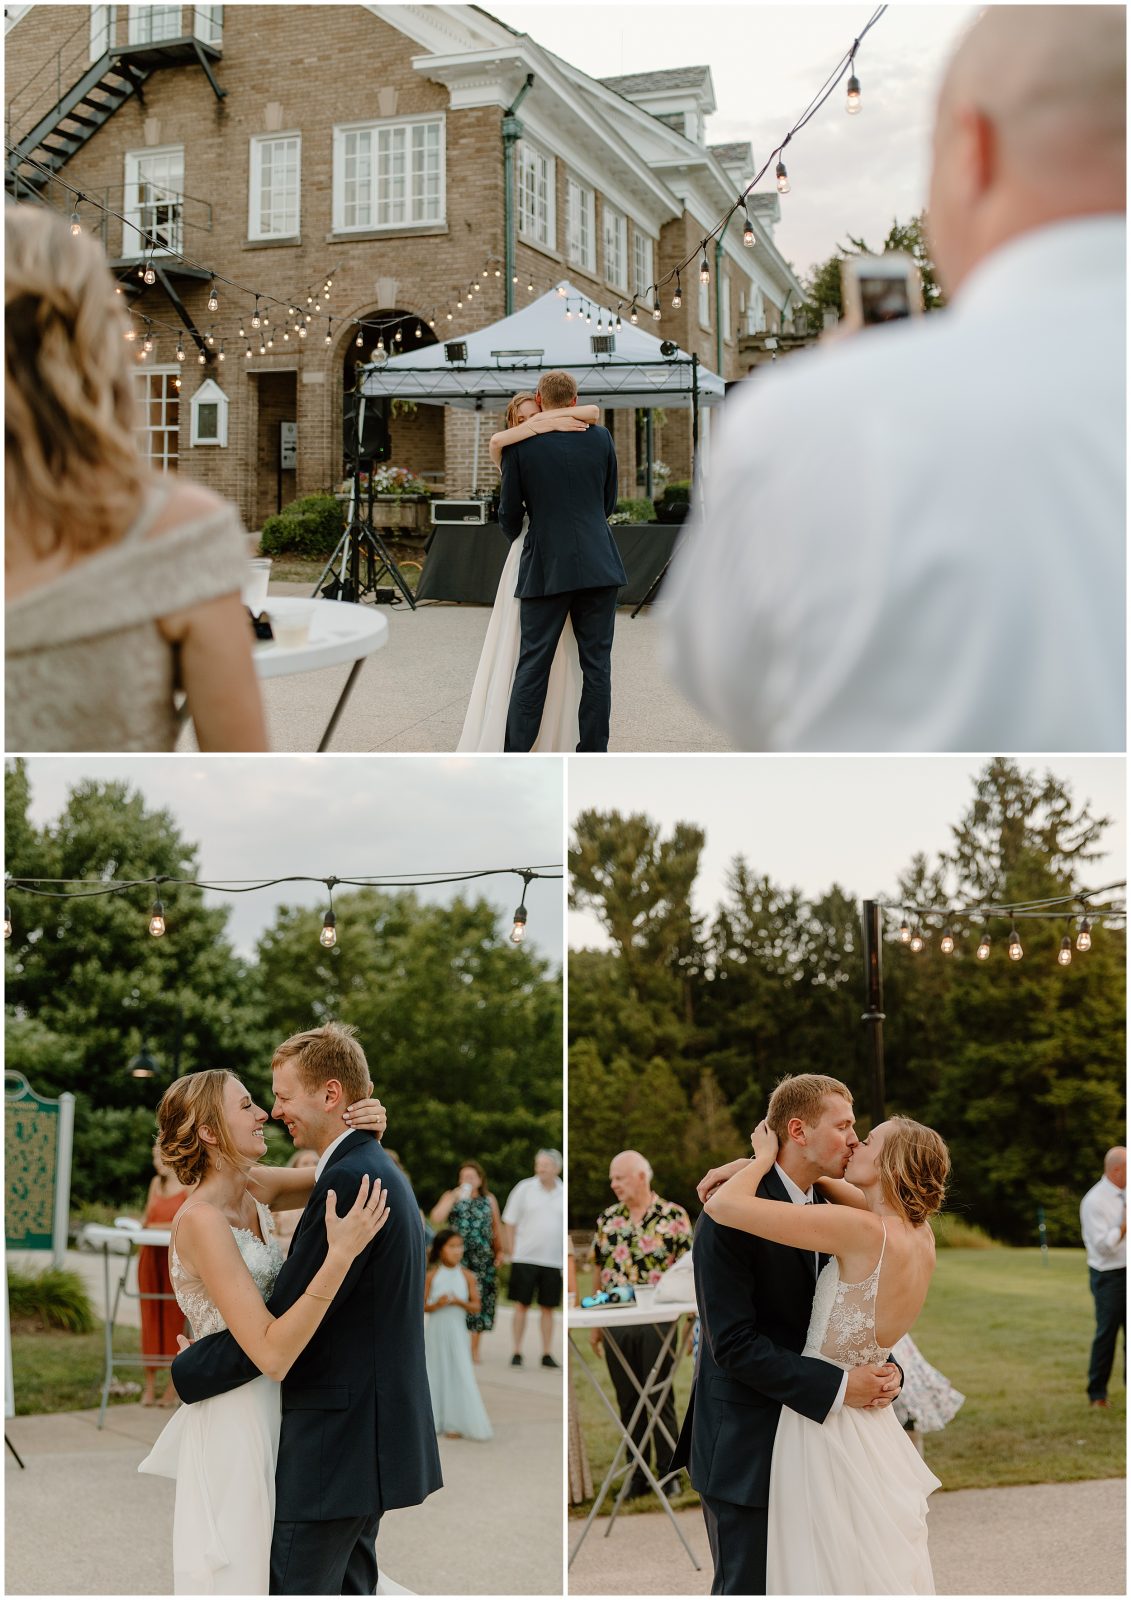 Photos of first dance at wedding